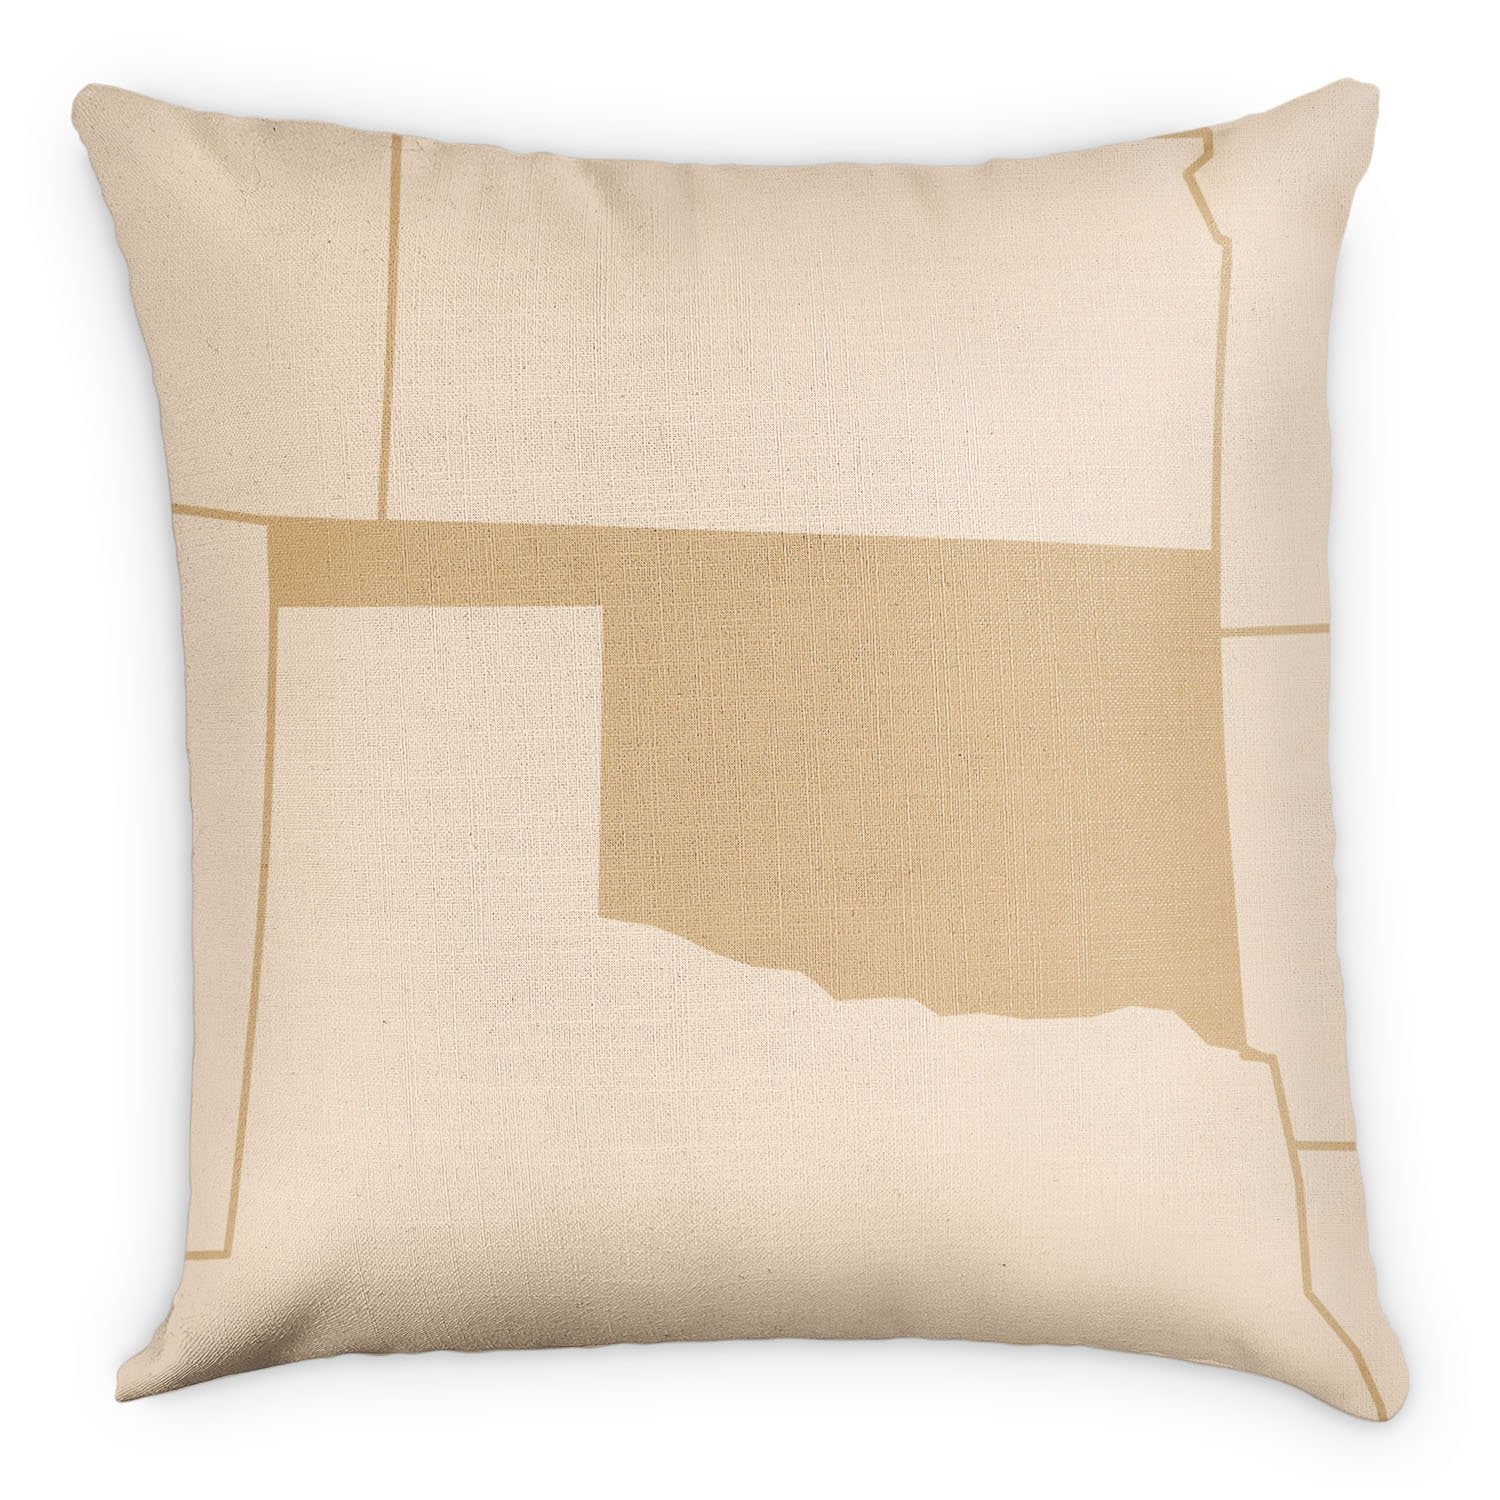 Oklahoma Square Pillow - Linen -  - Knotty Tie Co.